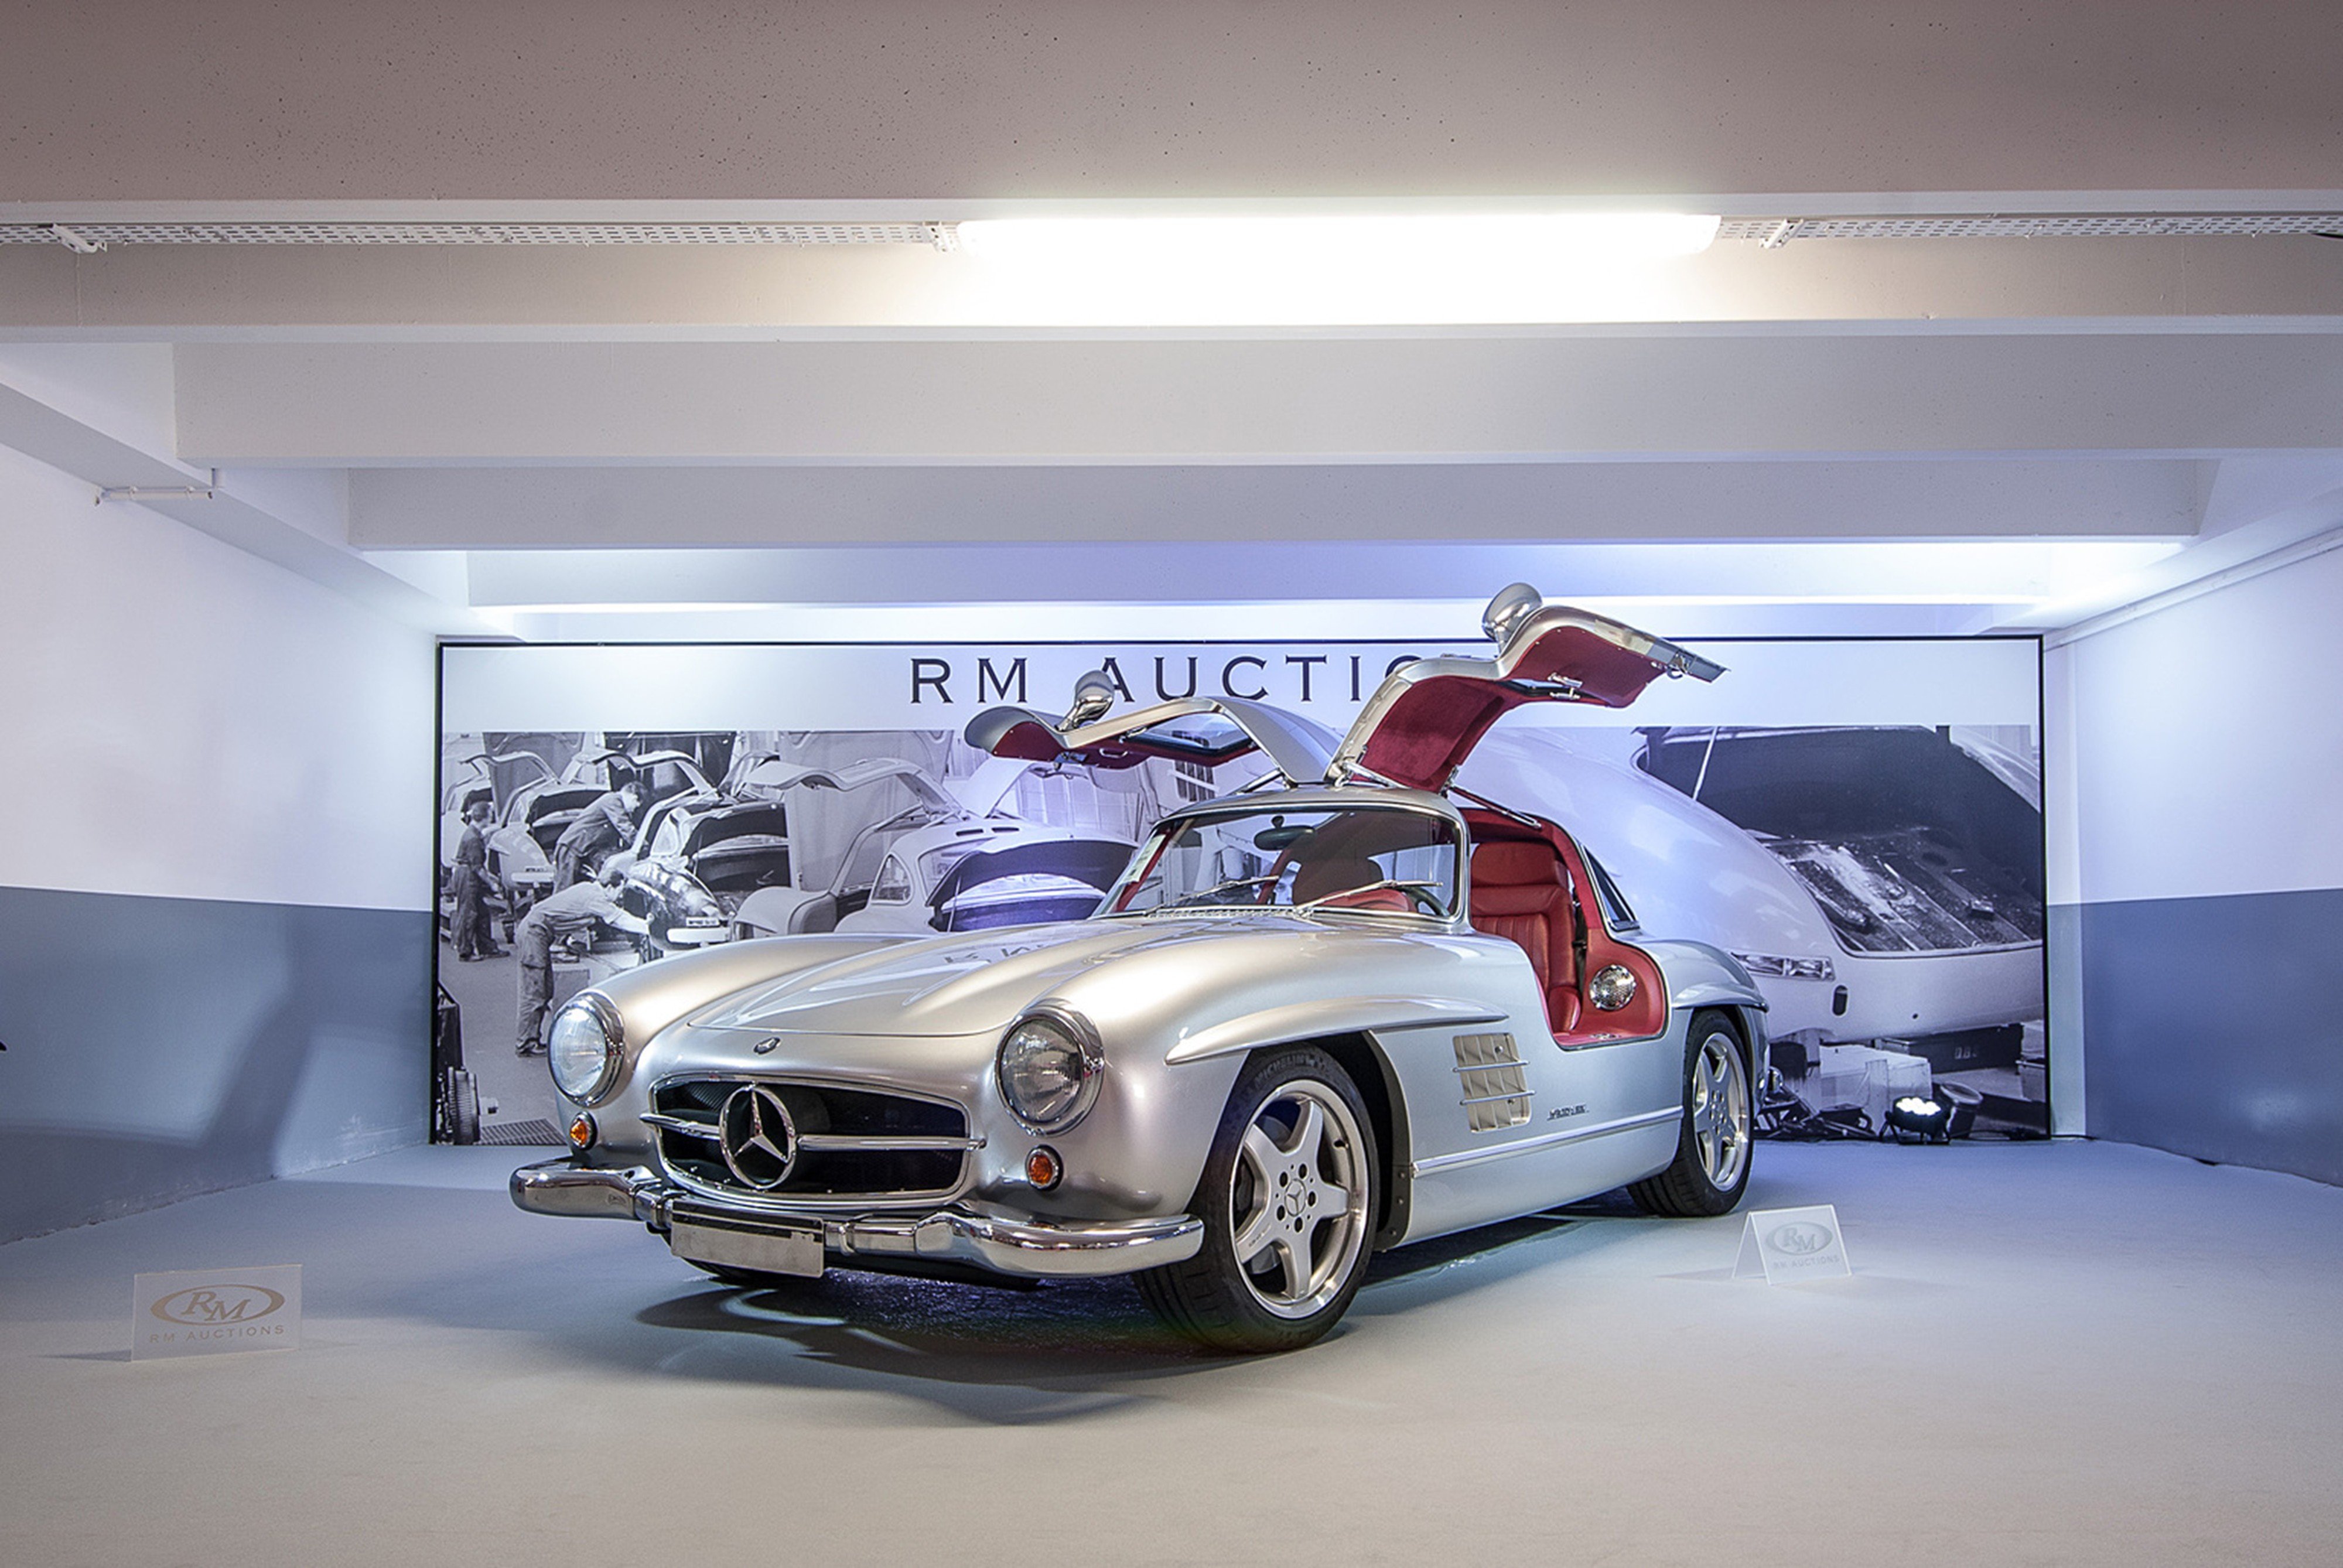 rmand039s, Auction, In, Monaco, Classic, Car, 1954, Mercedes benz, 300sl, Amg, 4000x2677 Wallpaper